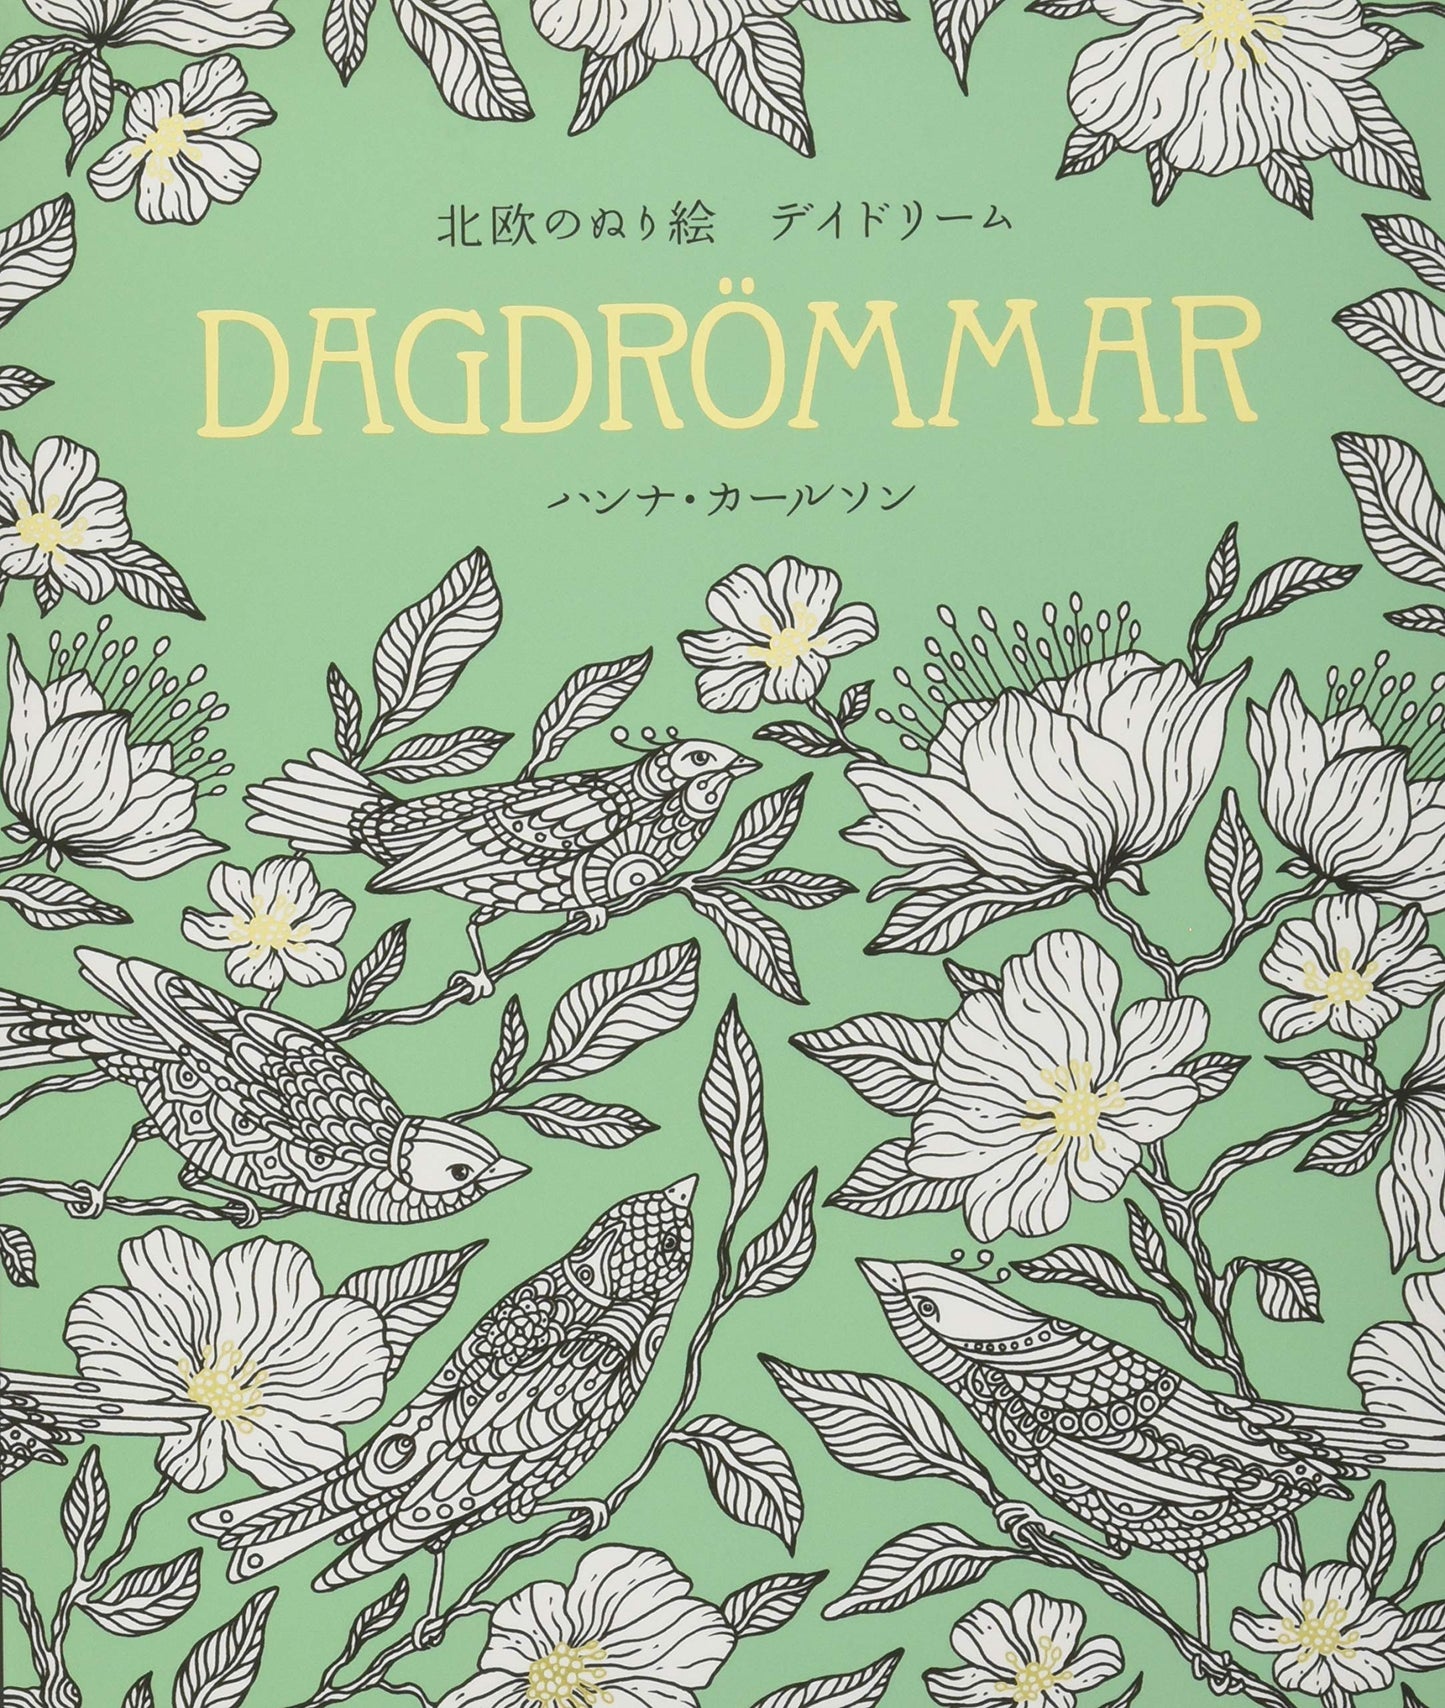 [FLASH SALE] DAGDROMMAR Daydream Colouring Book by hanna karlzon